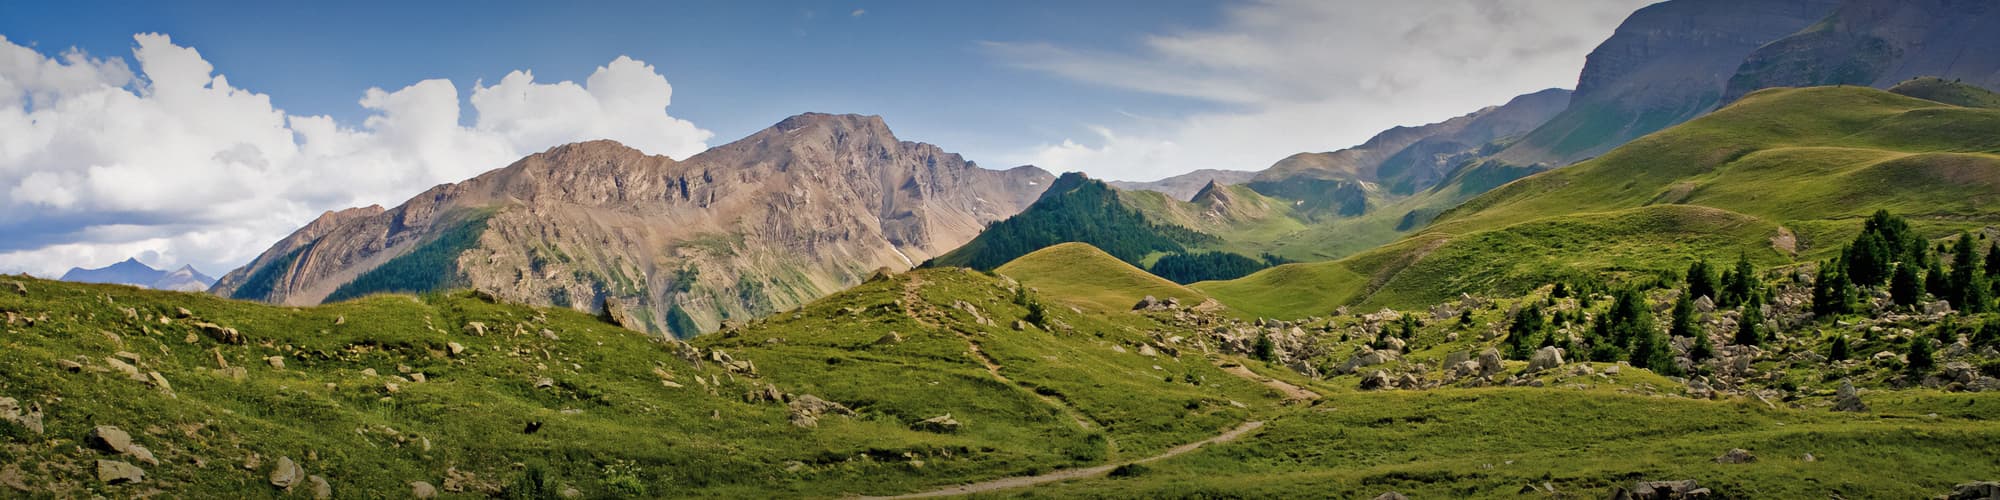 VTT Alpes du Sud © Uolir / Adobe Stock